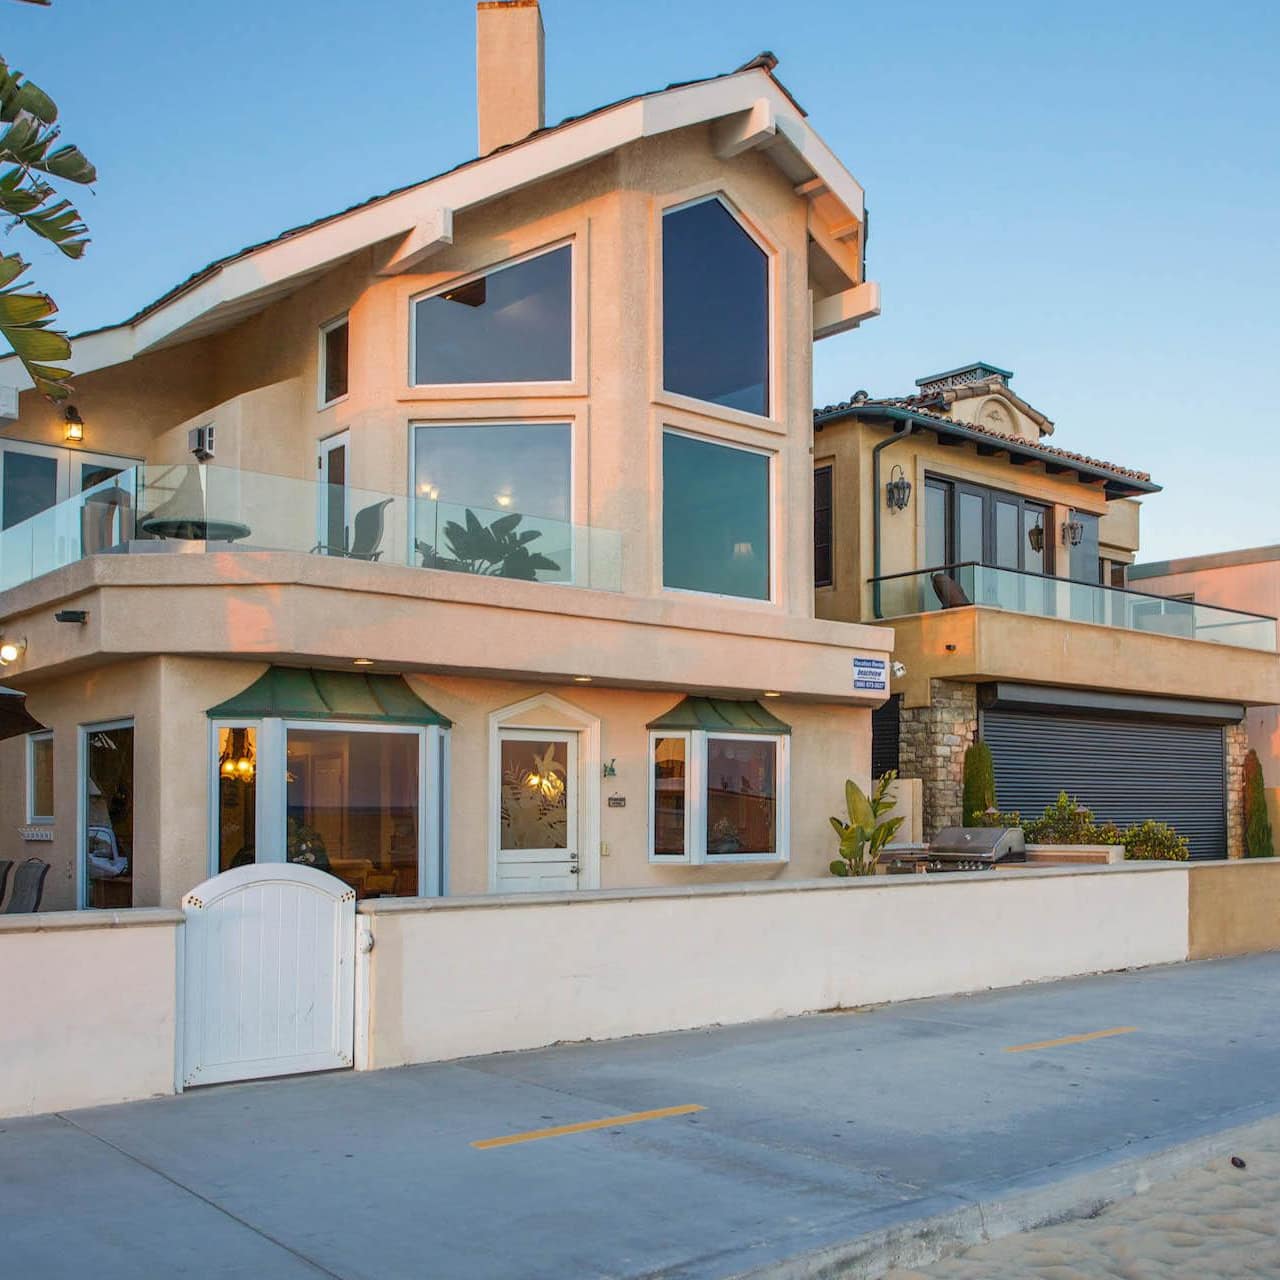 Get booking Newport Beach rentals